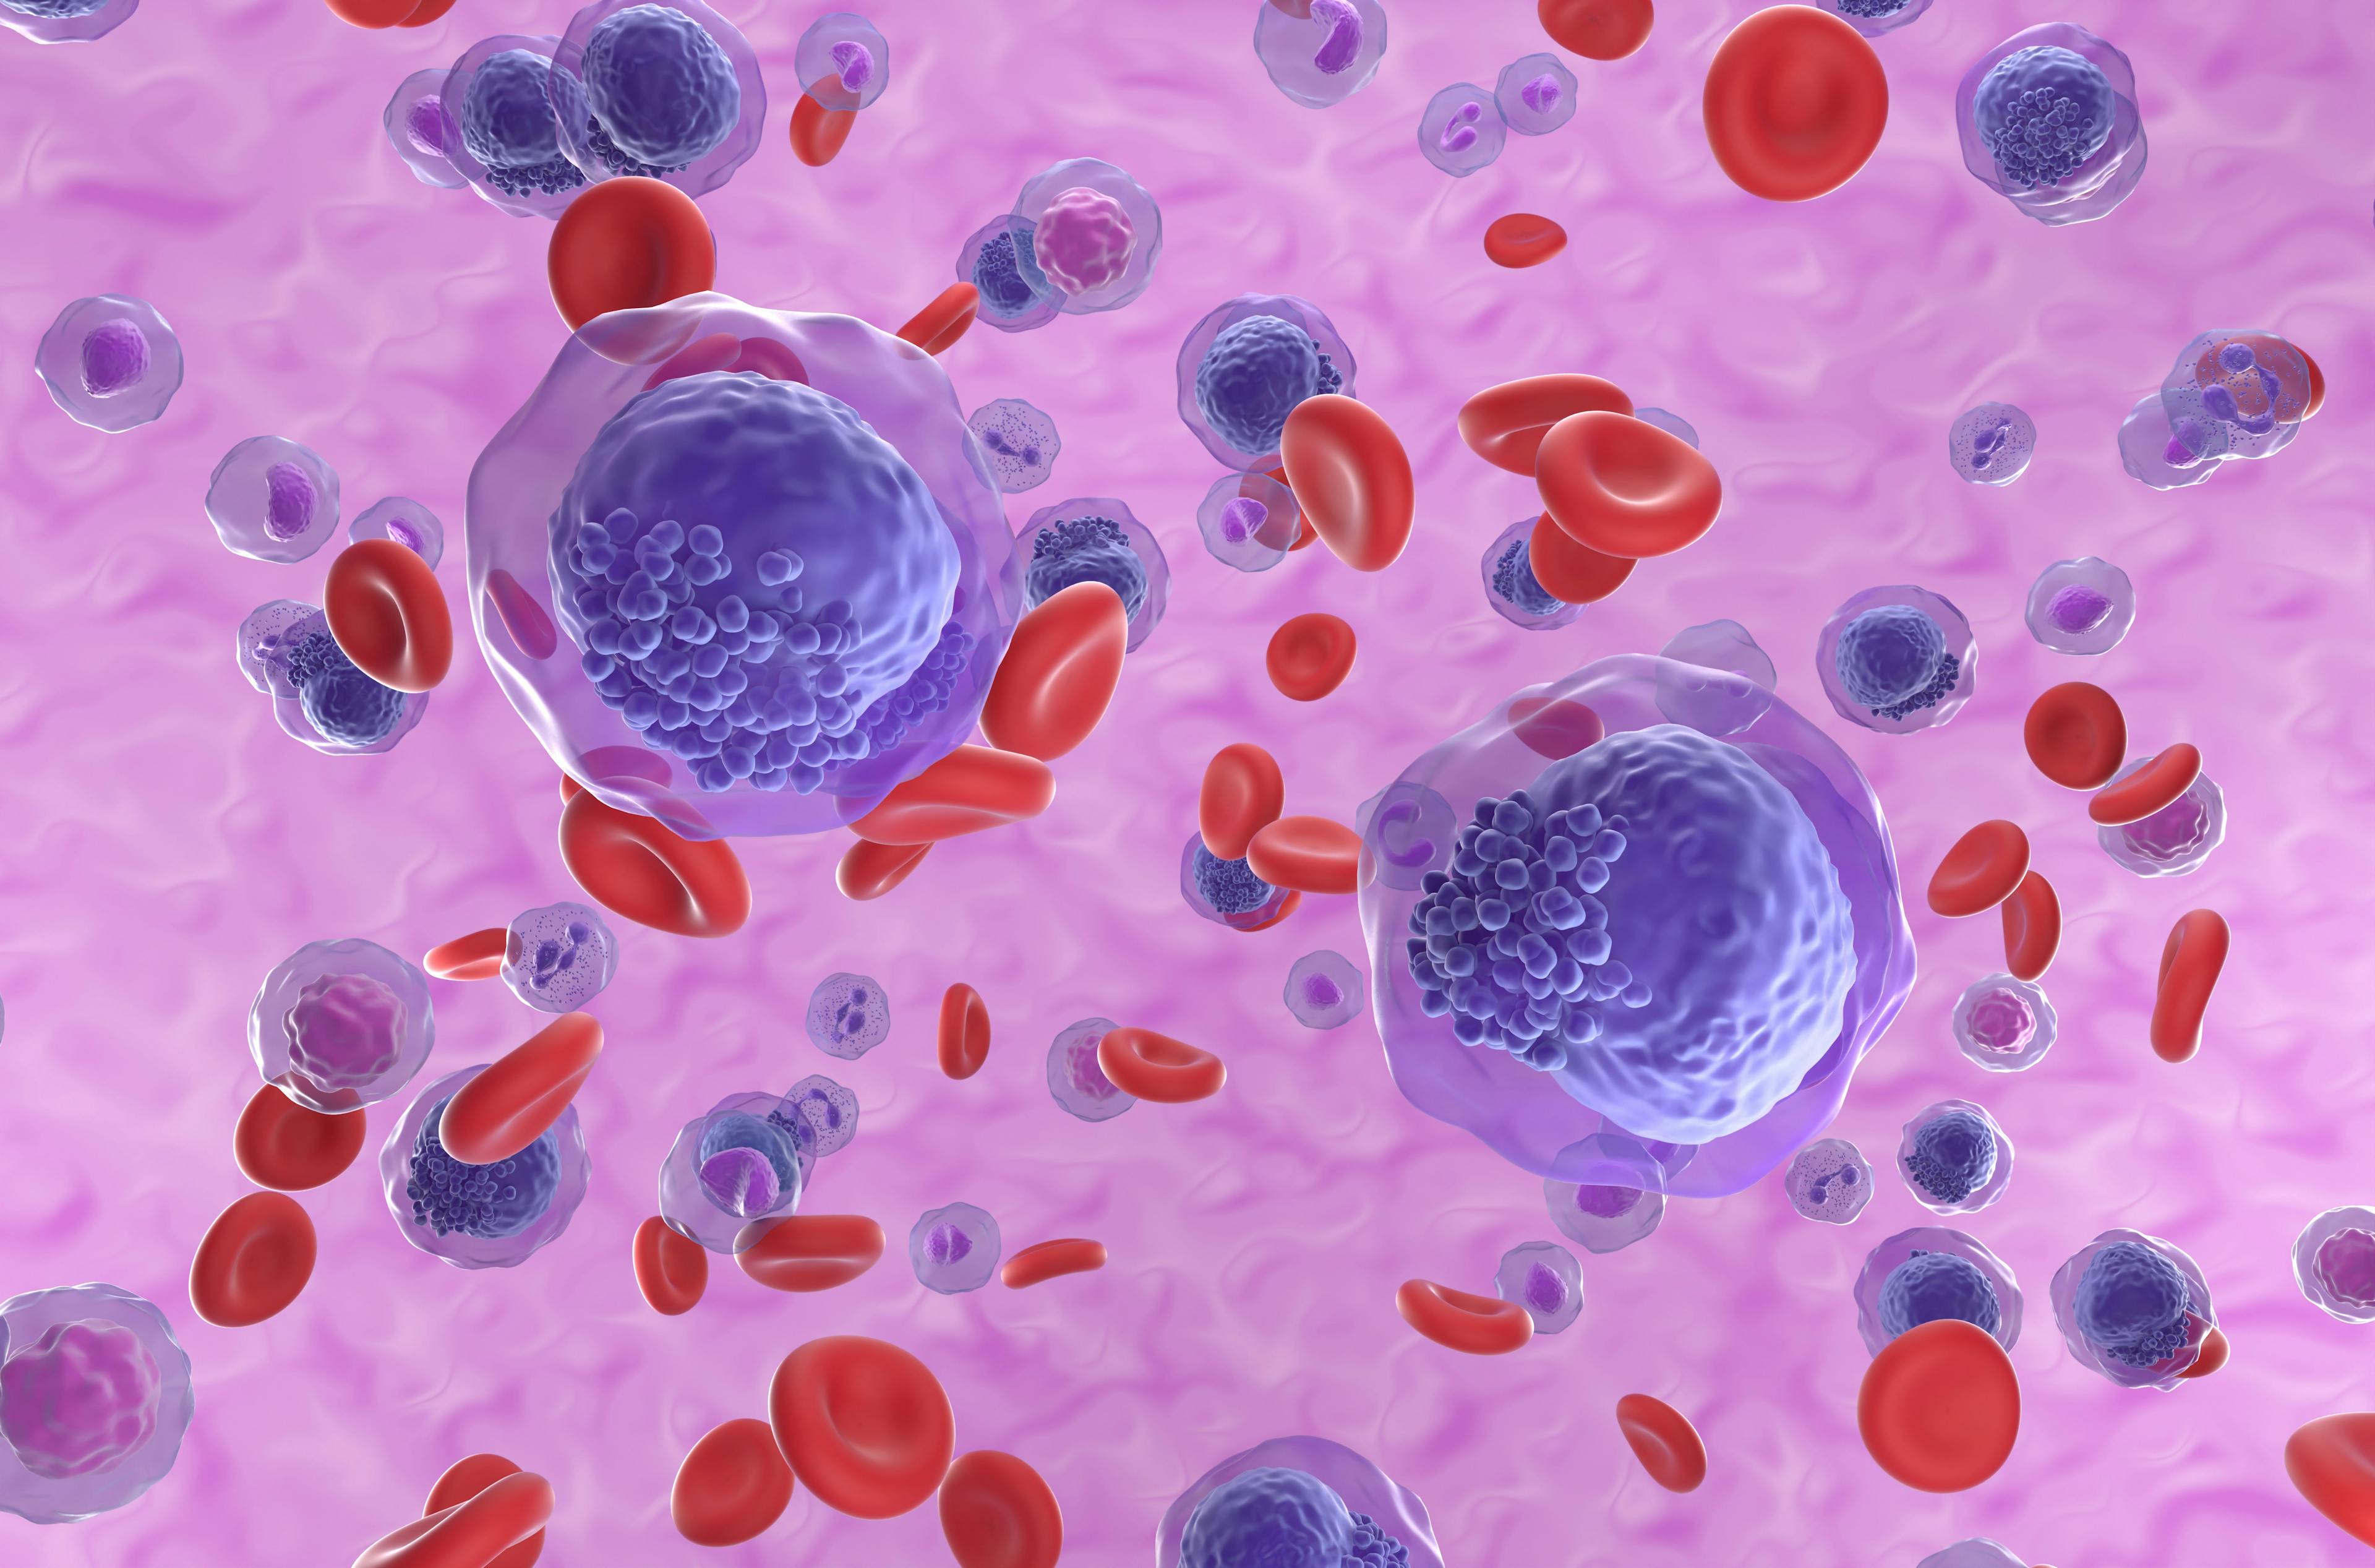 3D rendering of acute myeloid leukemia: ©LASZLO - stock.adobe.com